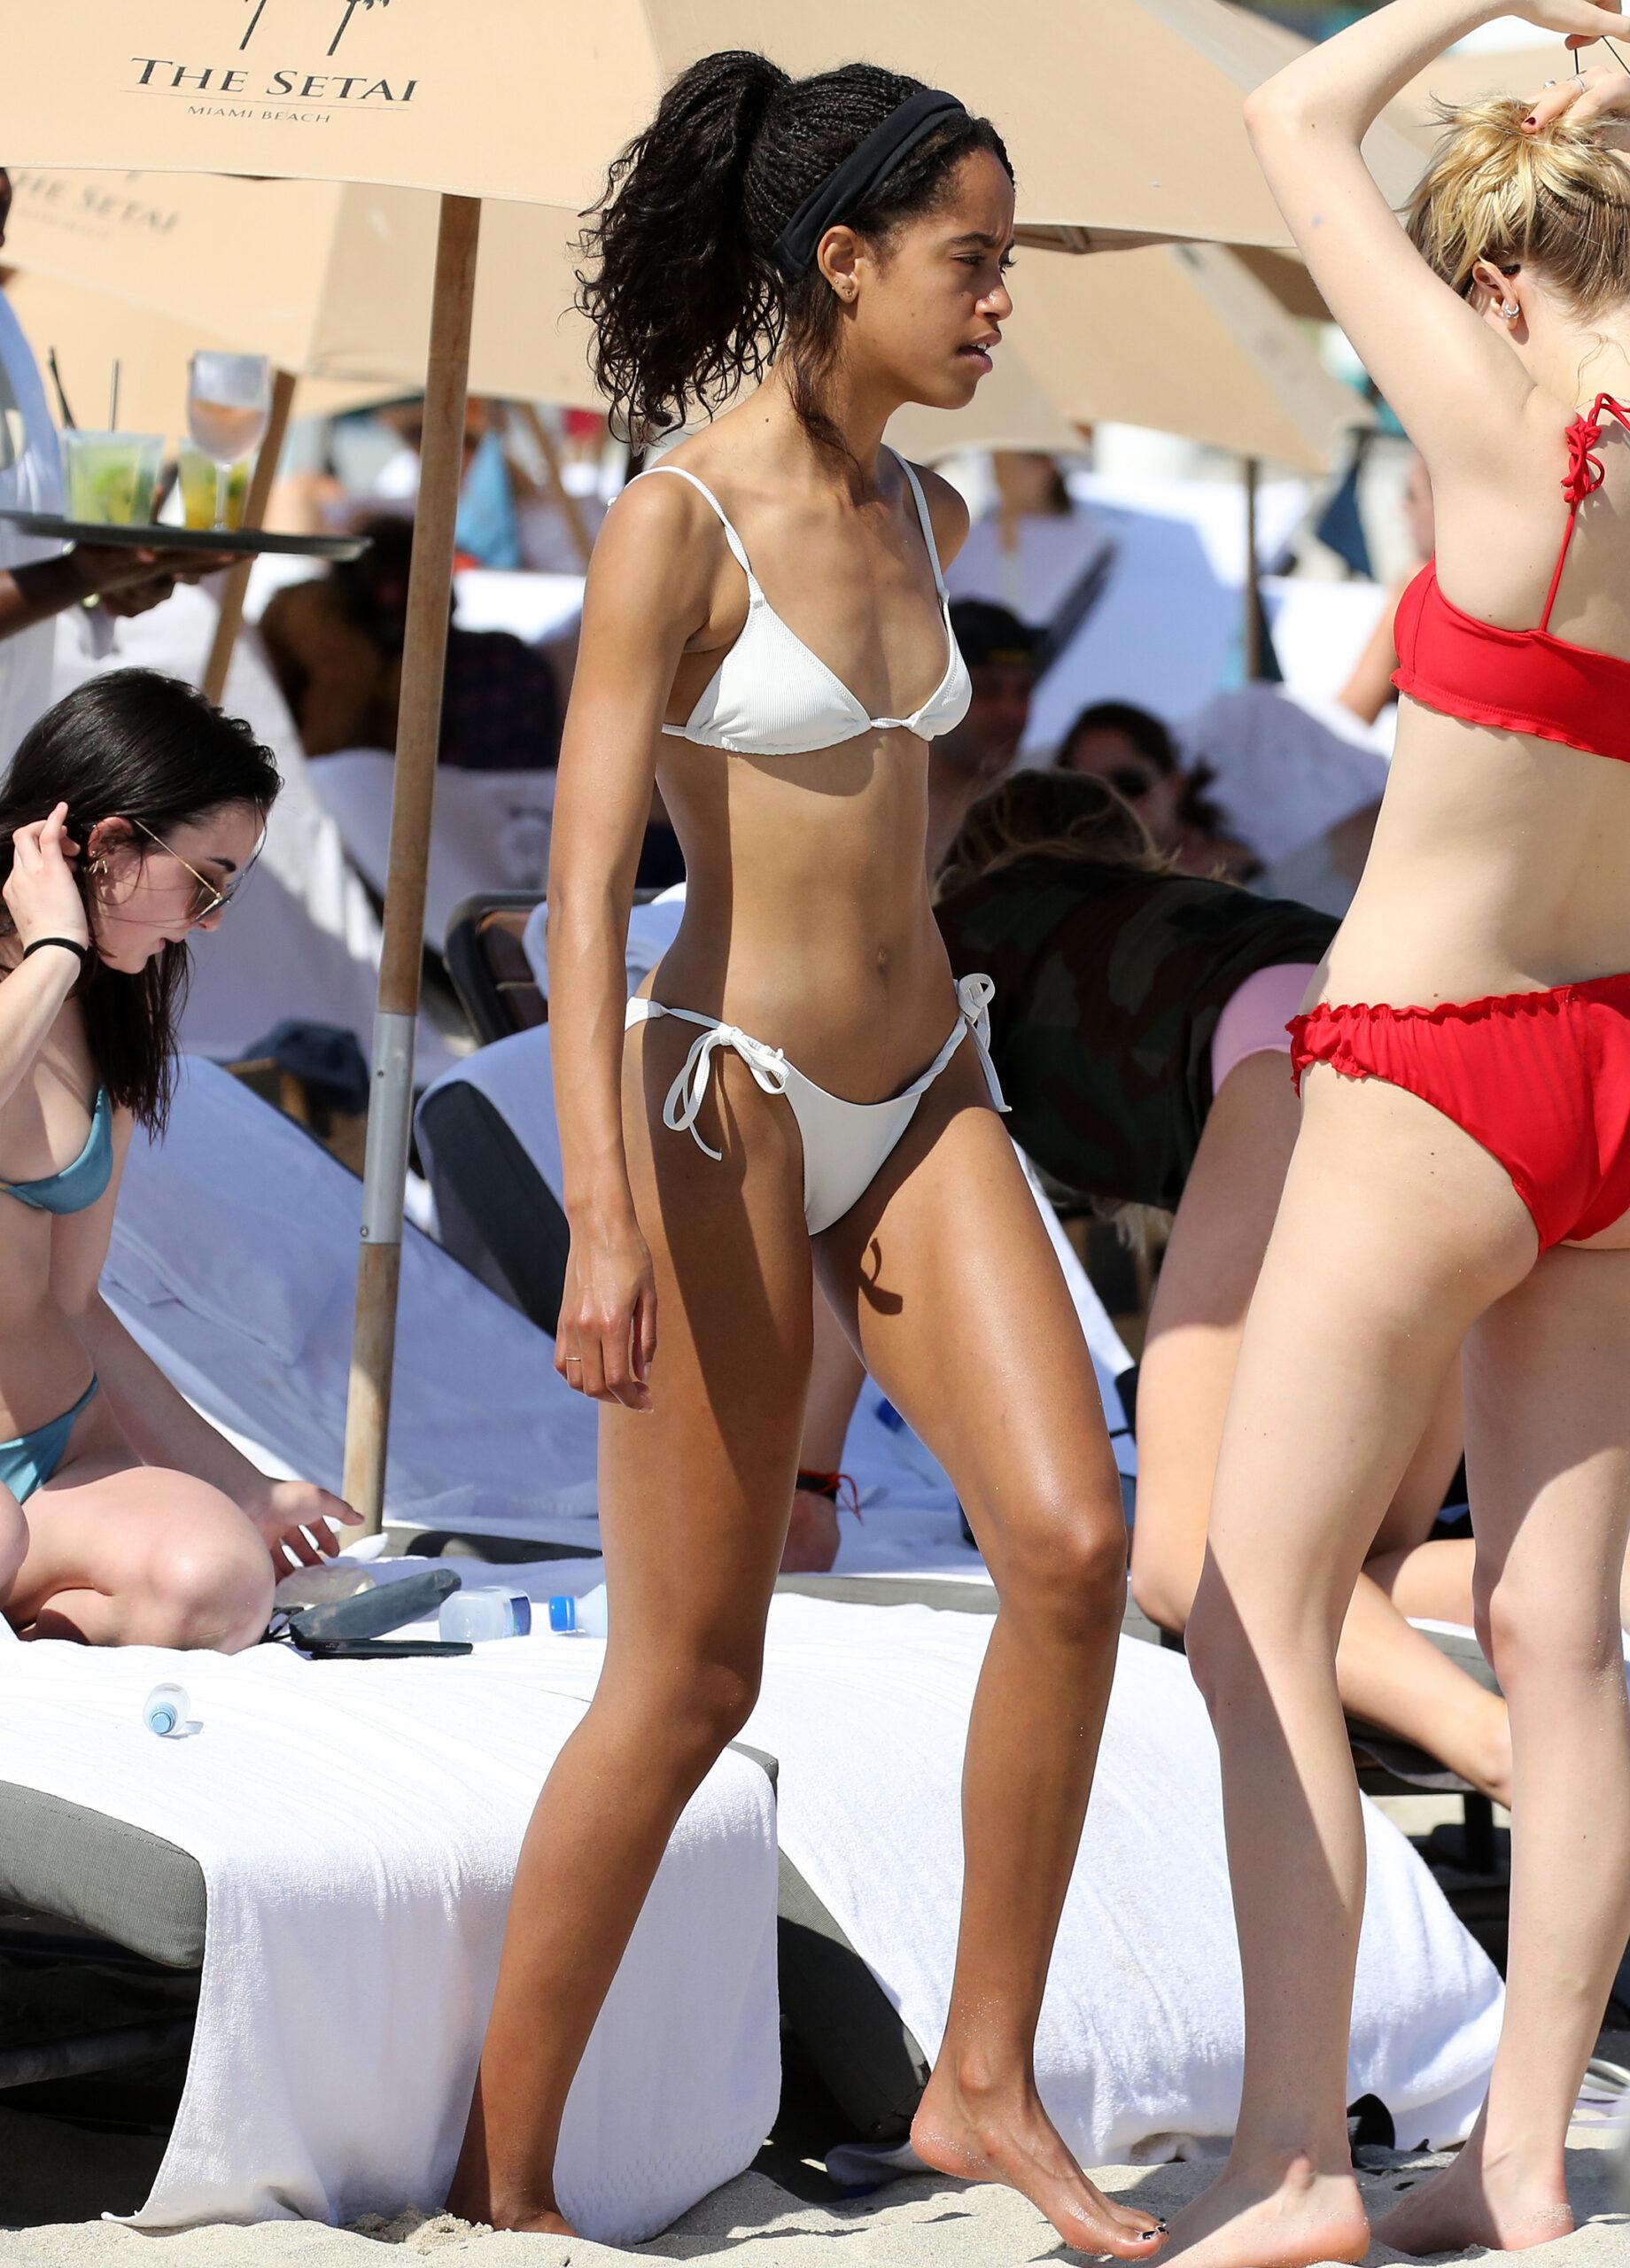 Malia Obama wears a white bikini as she relaxes with friends on the beach in Miami. 16 Feb 2019 Pictured: Malia Obama. Photo credit: MEGA TheMegaAgency.com +1 888 505 6342 (Mega Agency TagID: MEGA361385_001.jpg) [Photo via Mega Agency]